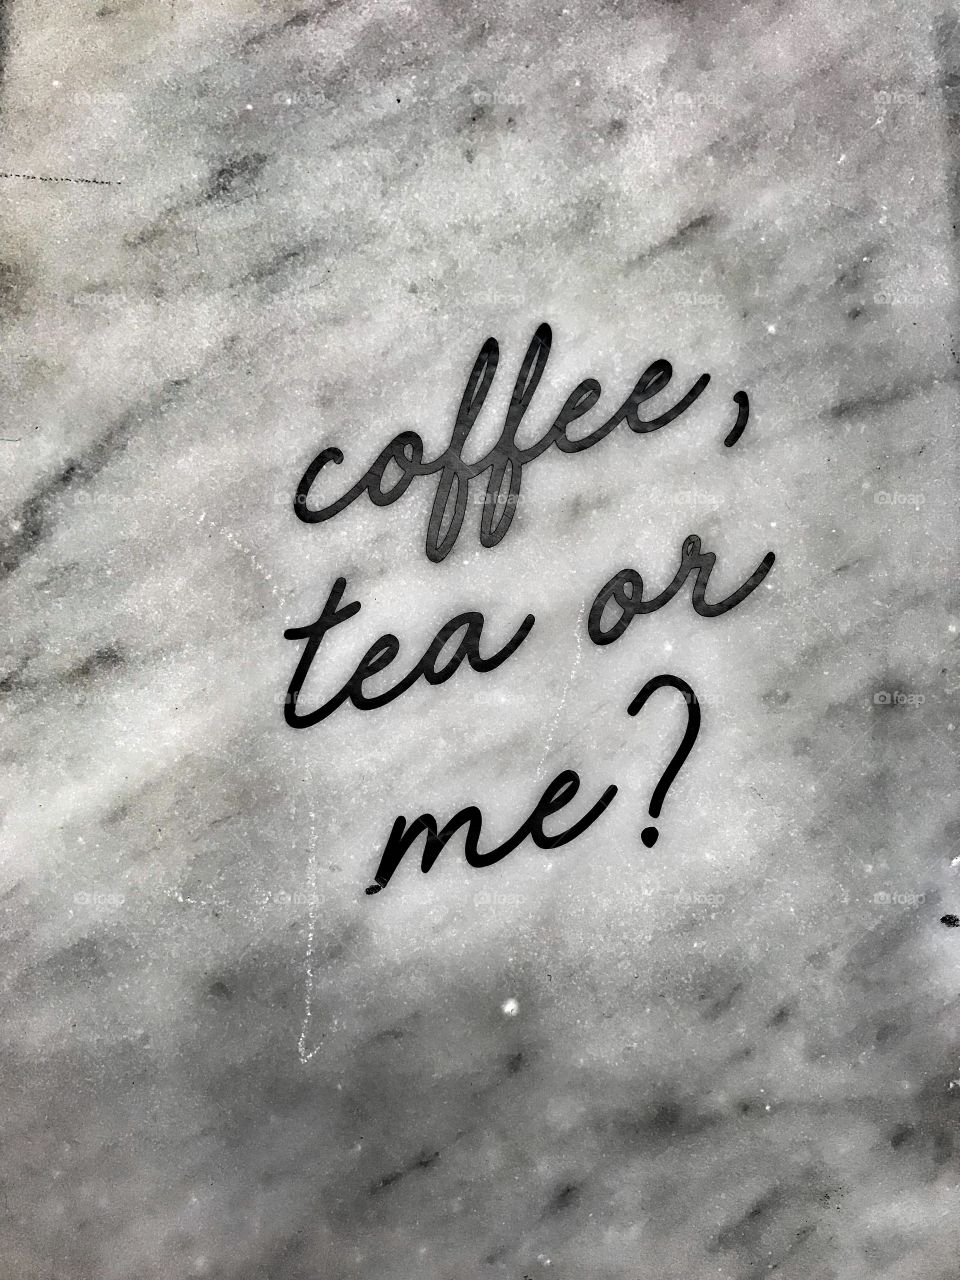 Coffee,tea or me?